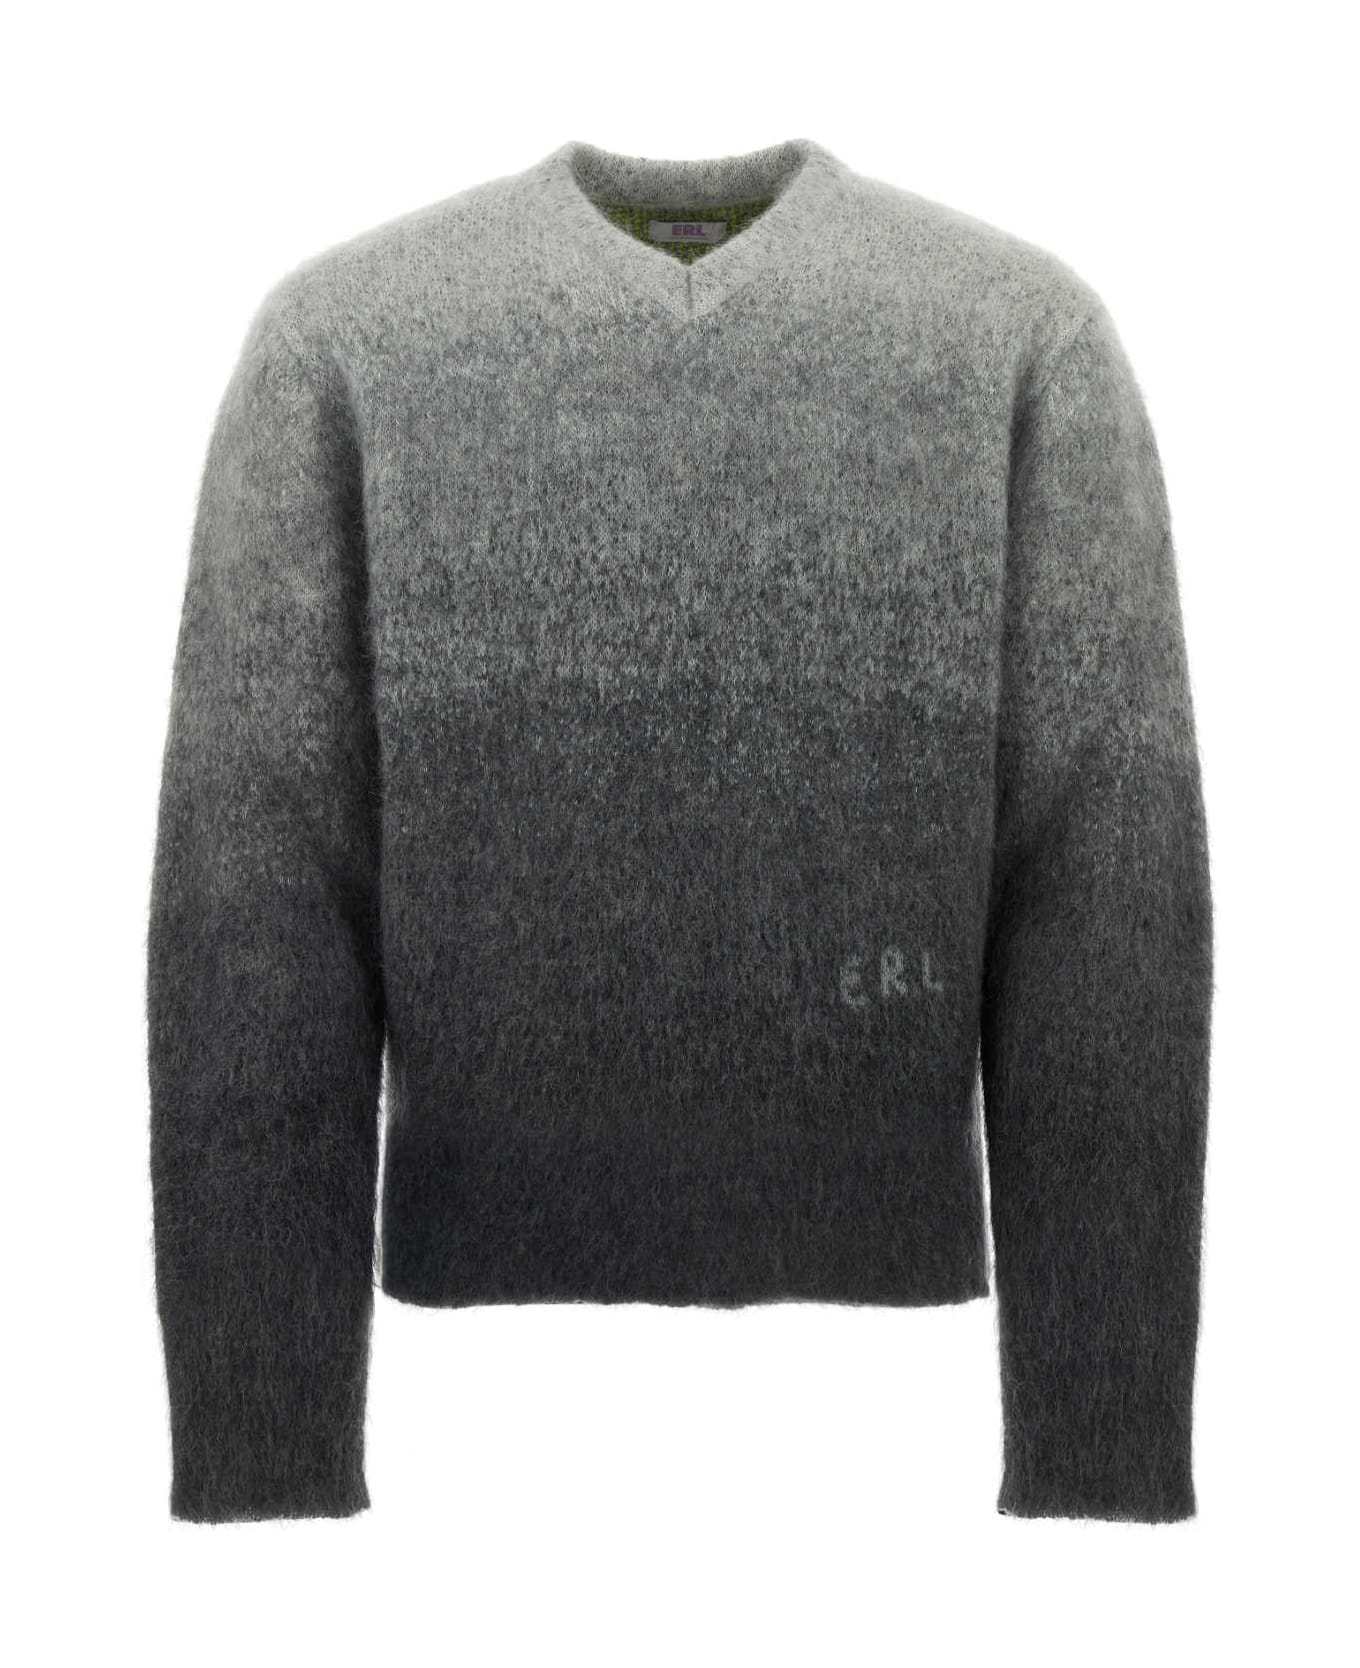 ERL Multicolor Mohair Blend Sweater - GREYMELANGE